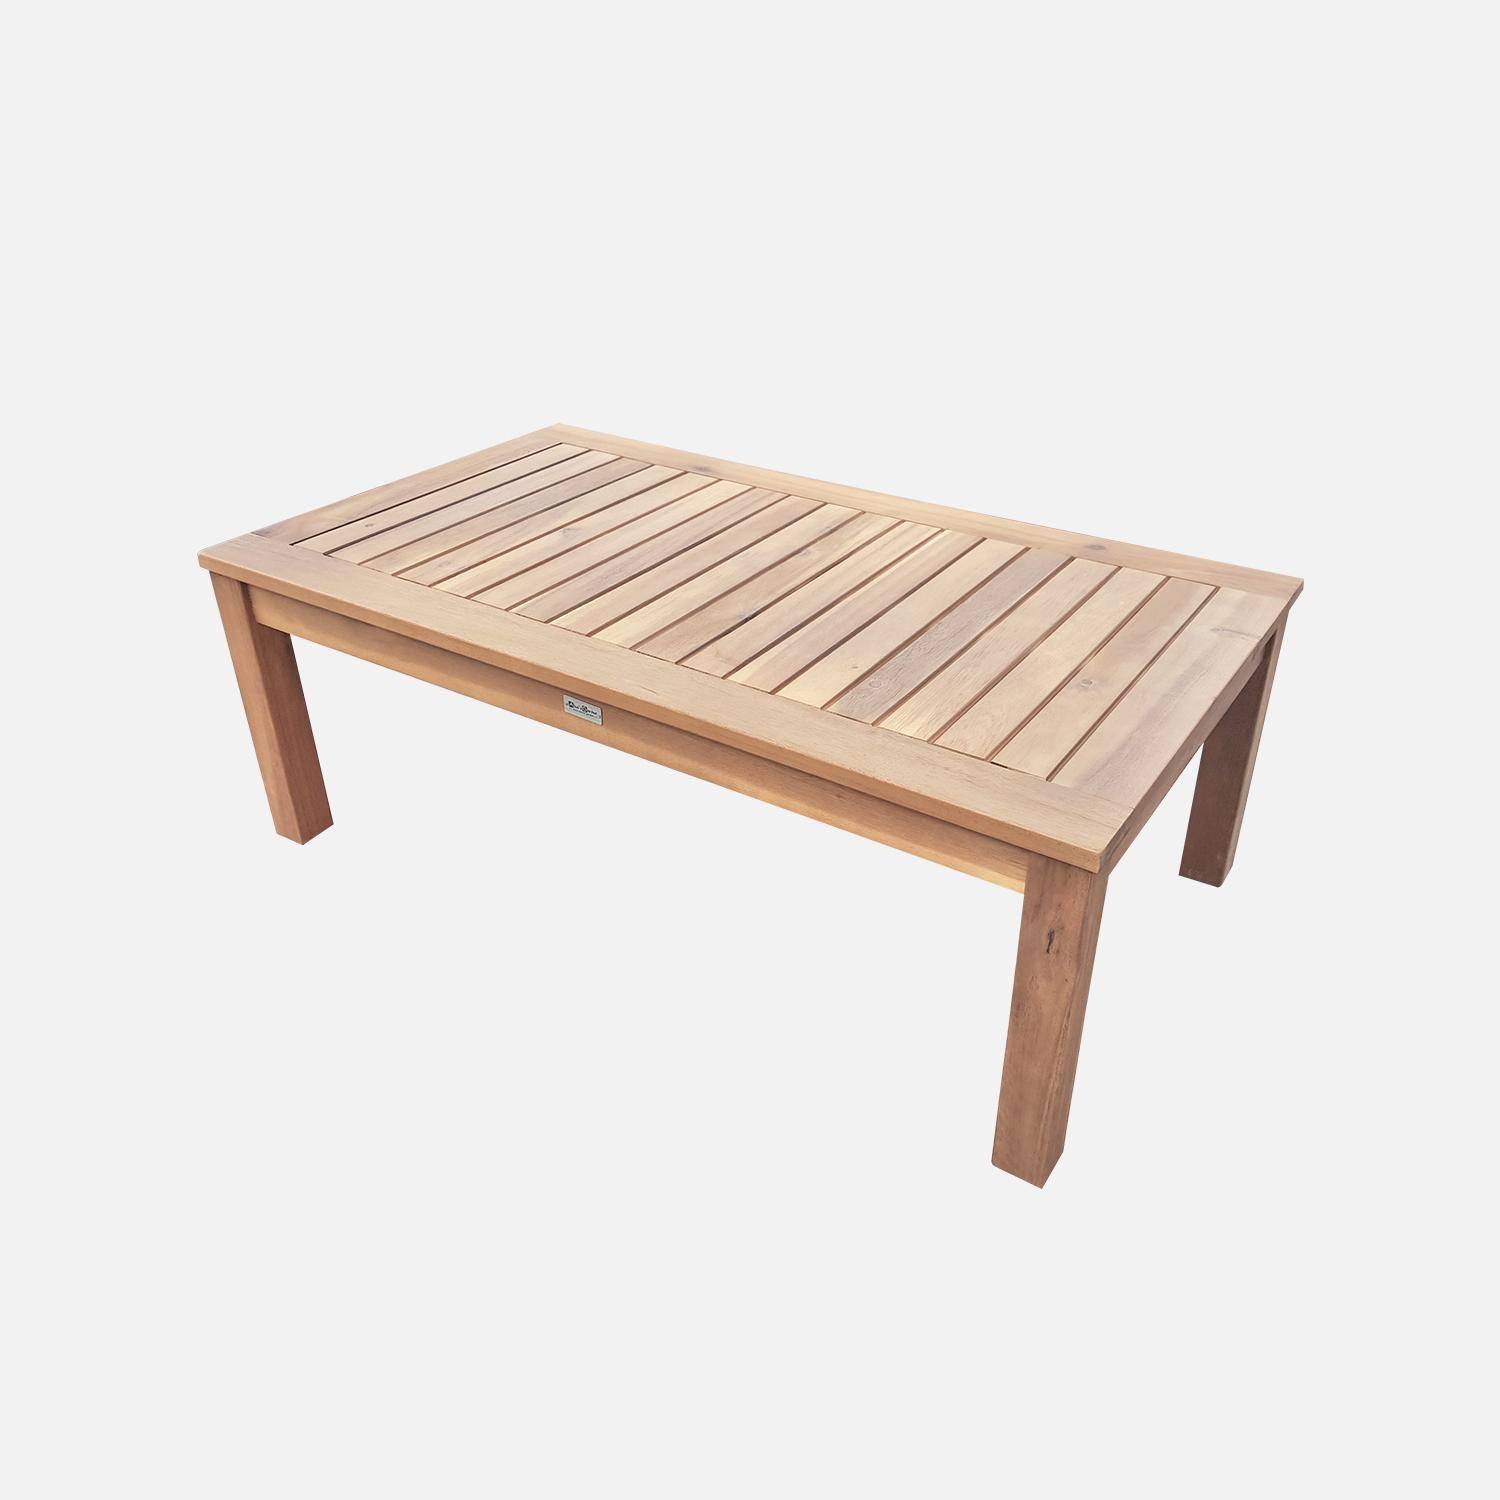 4-seater wooden garden sofa - Acacia wood sofa, armchairs and coffee table, designer piece  - Ushuaia - Off-white,sweeek,Photo5